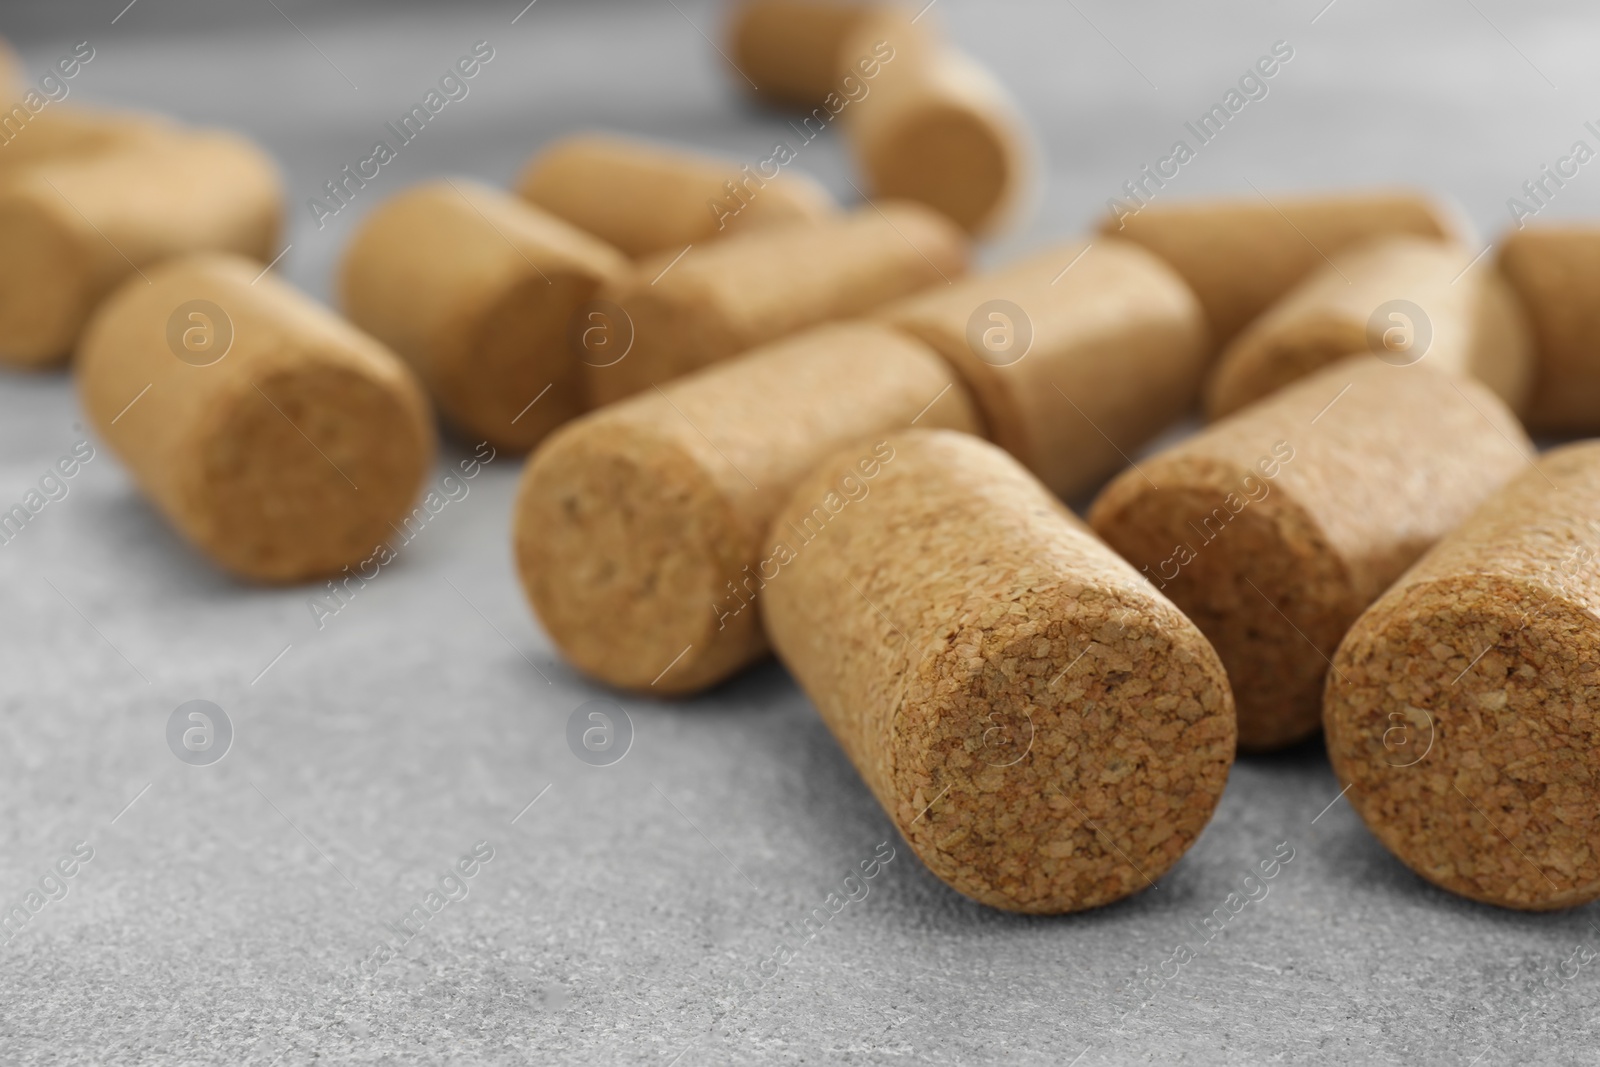 Photo of Wine bottle corks on light grey table, closeup